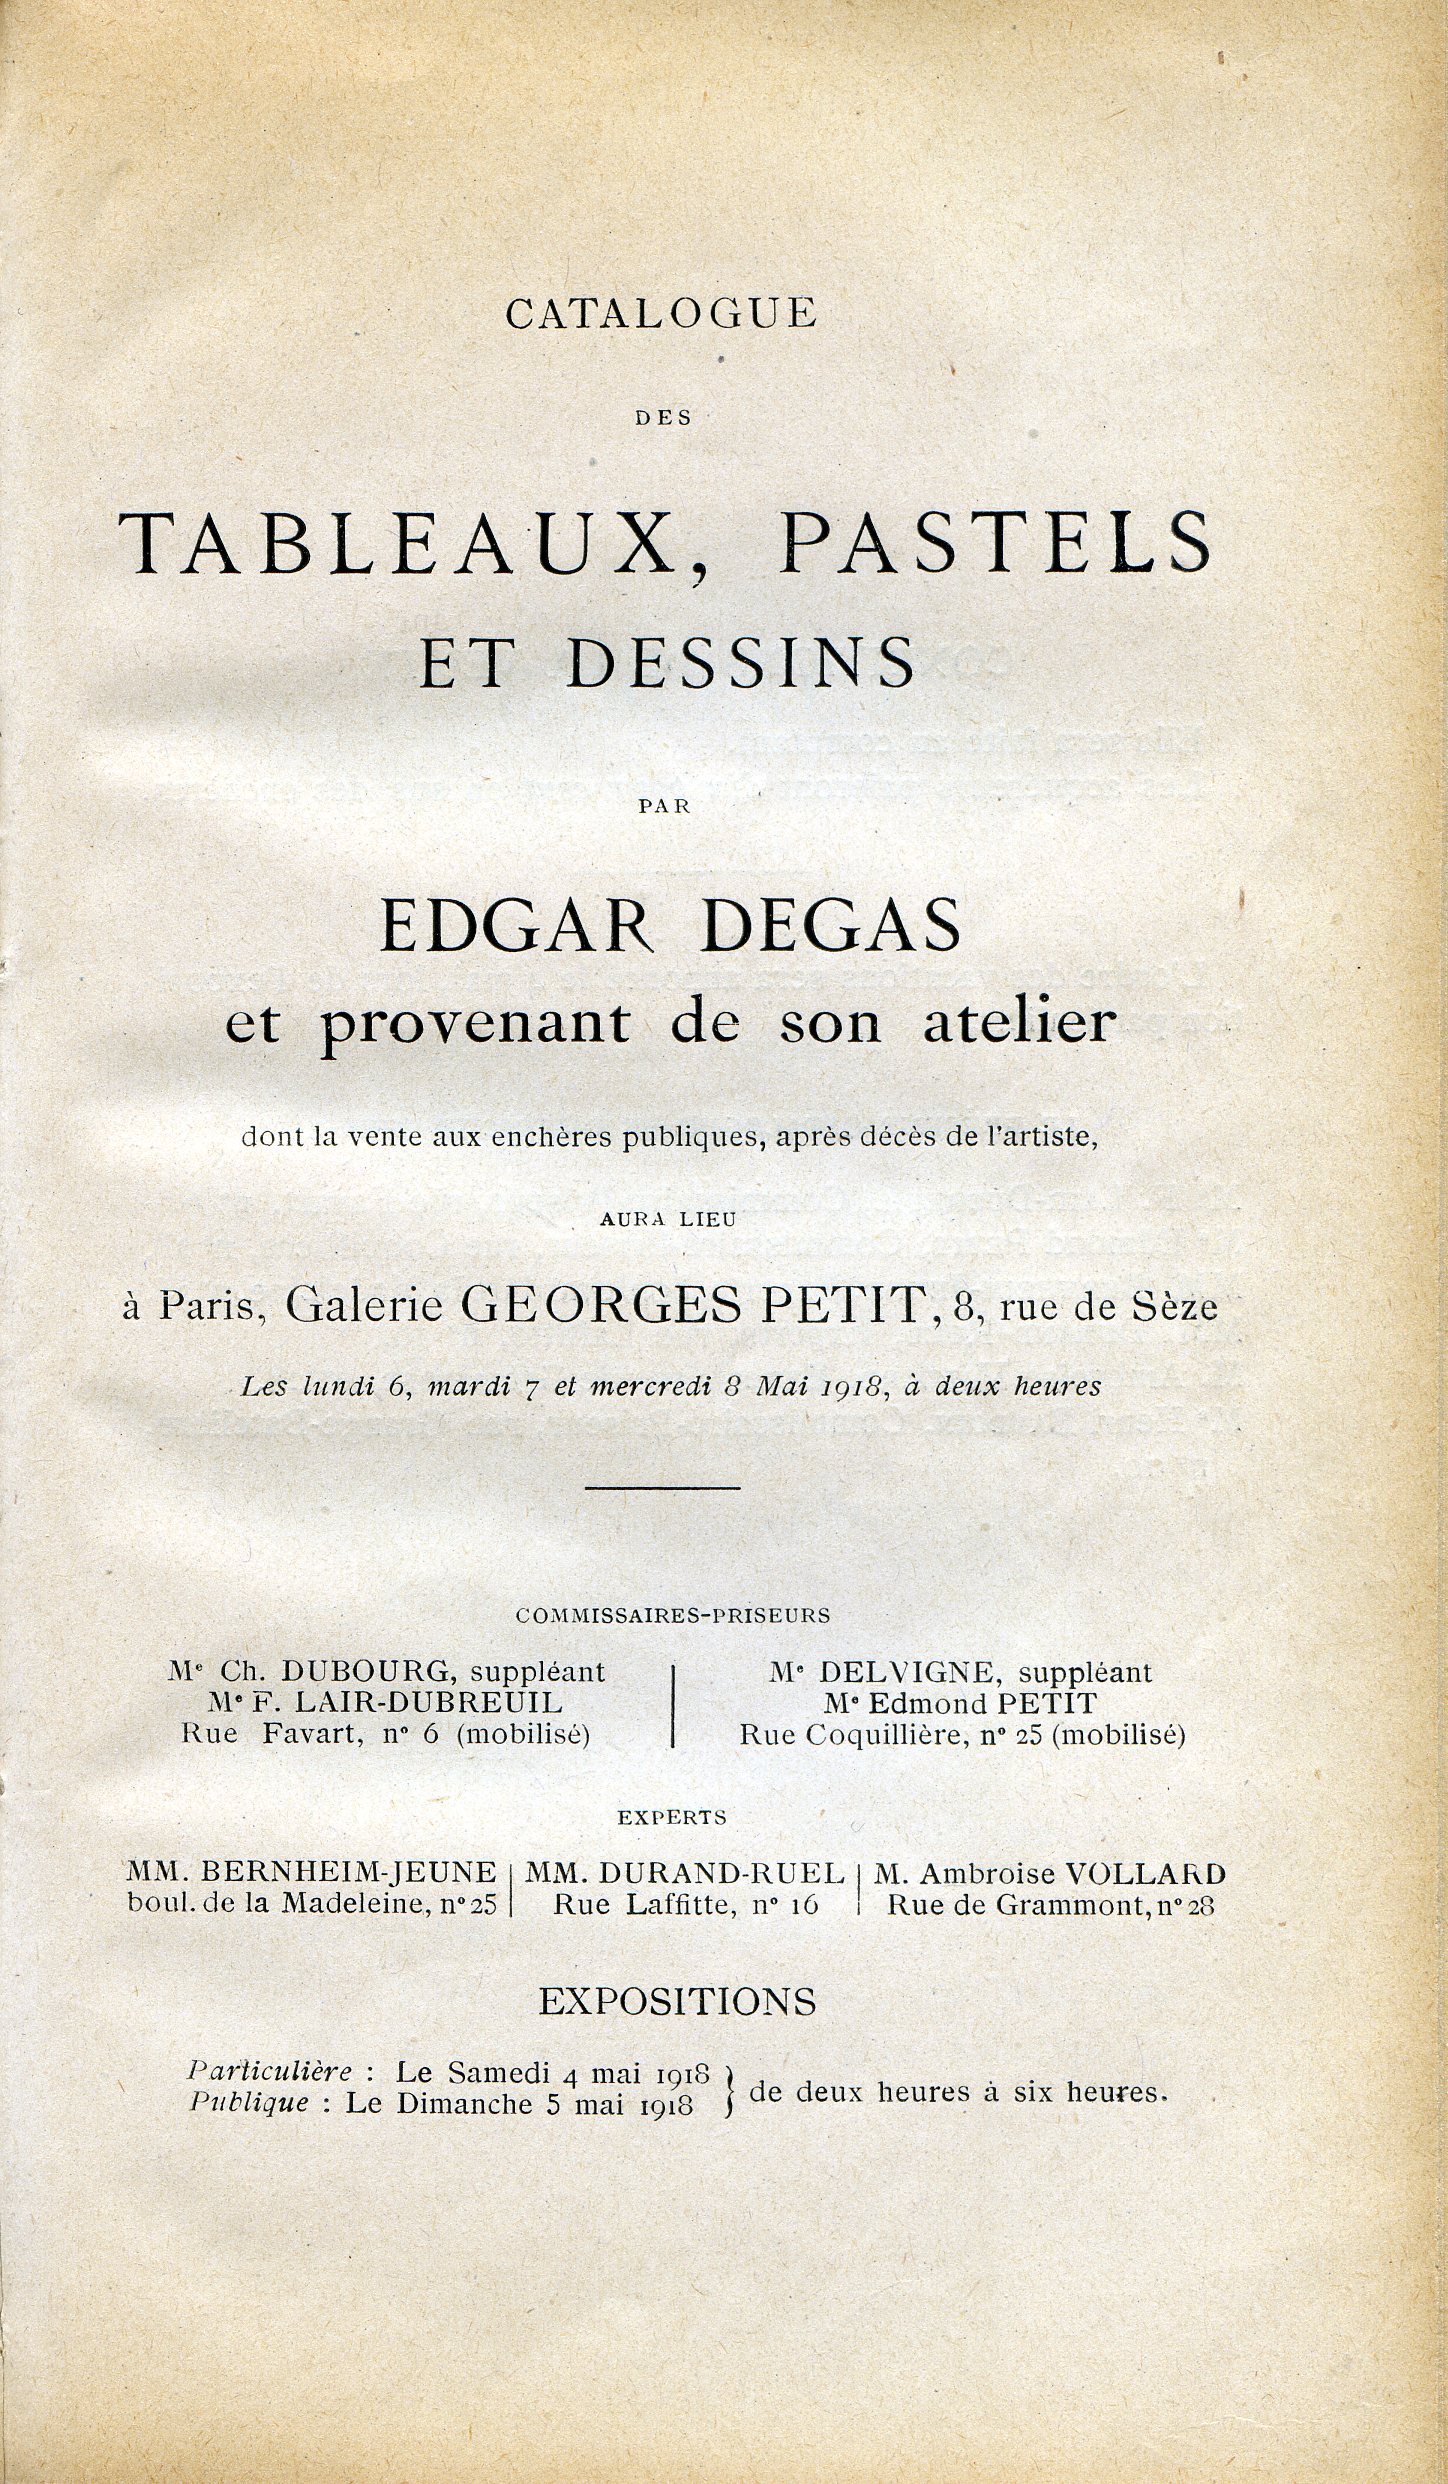 Title page of the catalogue Atelier Edgar Degas (1re Vente).